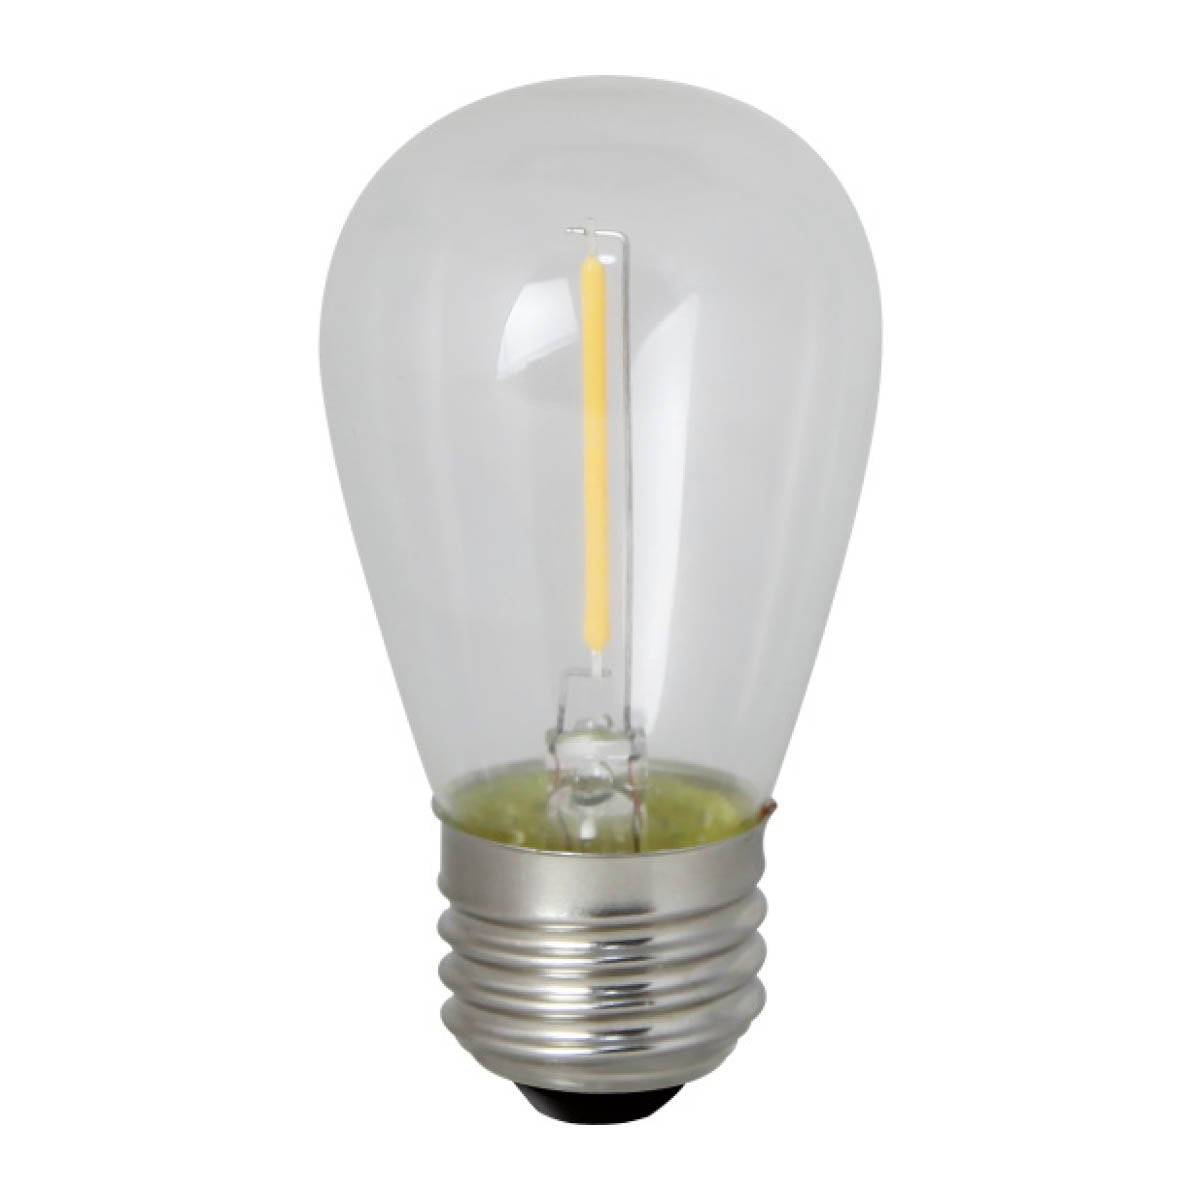 Bulbrite 0.7 Watt Clear Filament S14 Medium (E26) LED Light Bulb - 75 Lumens, 2700K